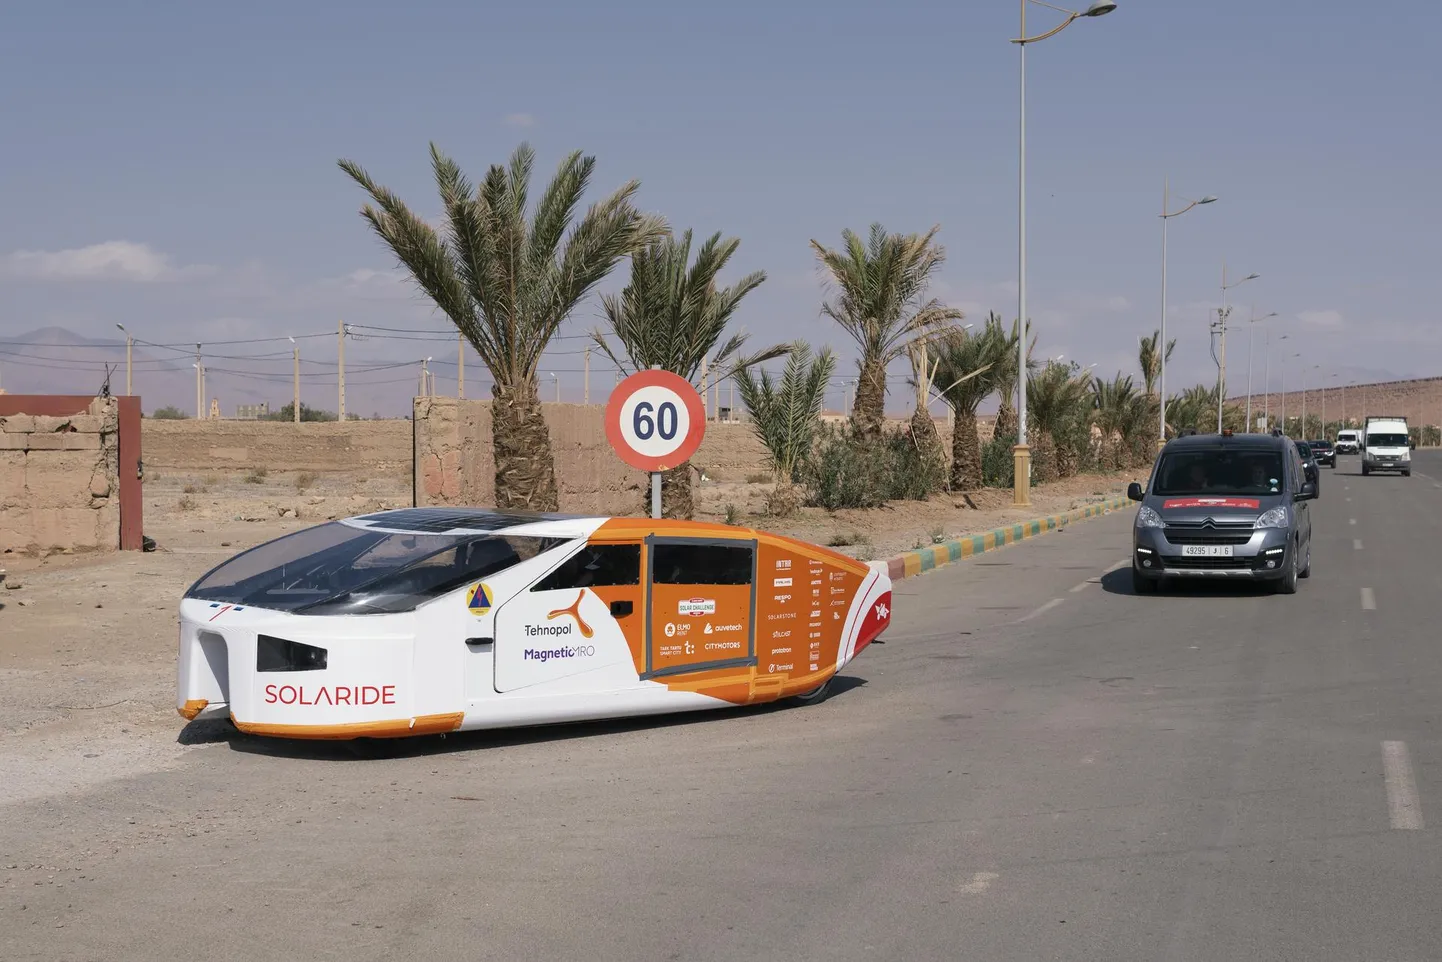 Solaride päikeseauto Maroko teedel. Sügis 2021